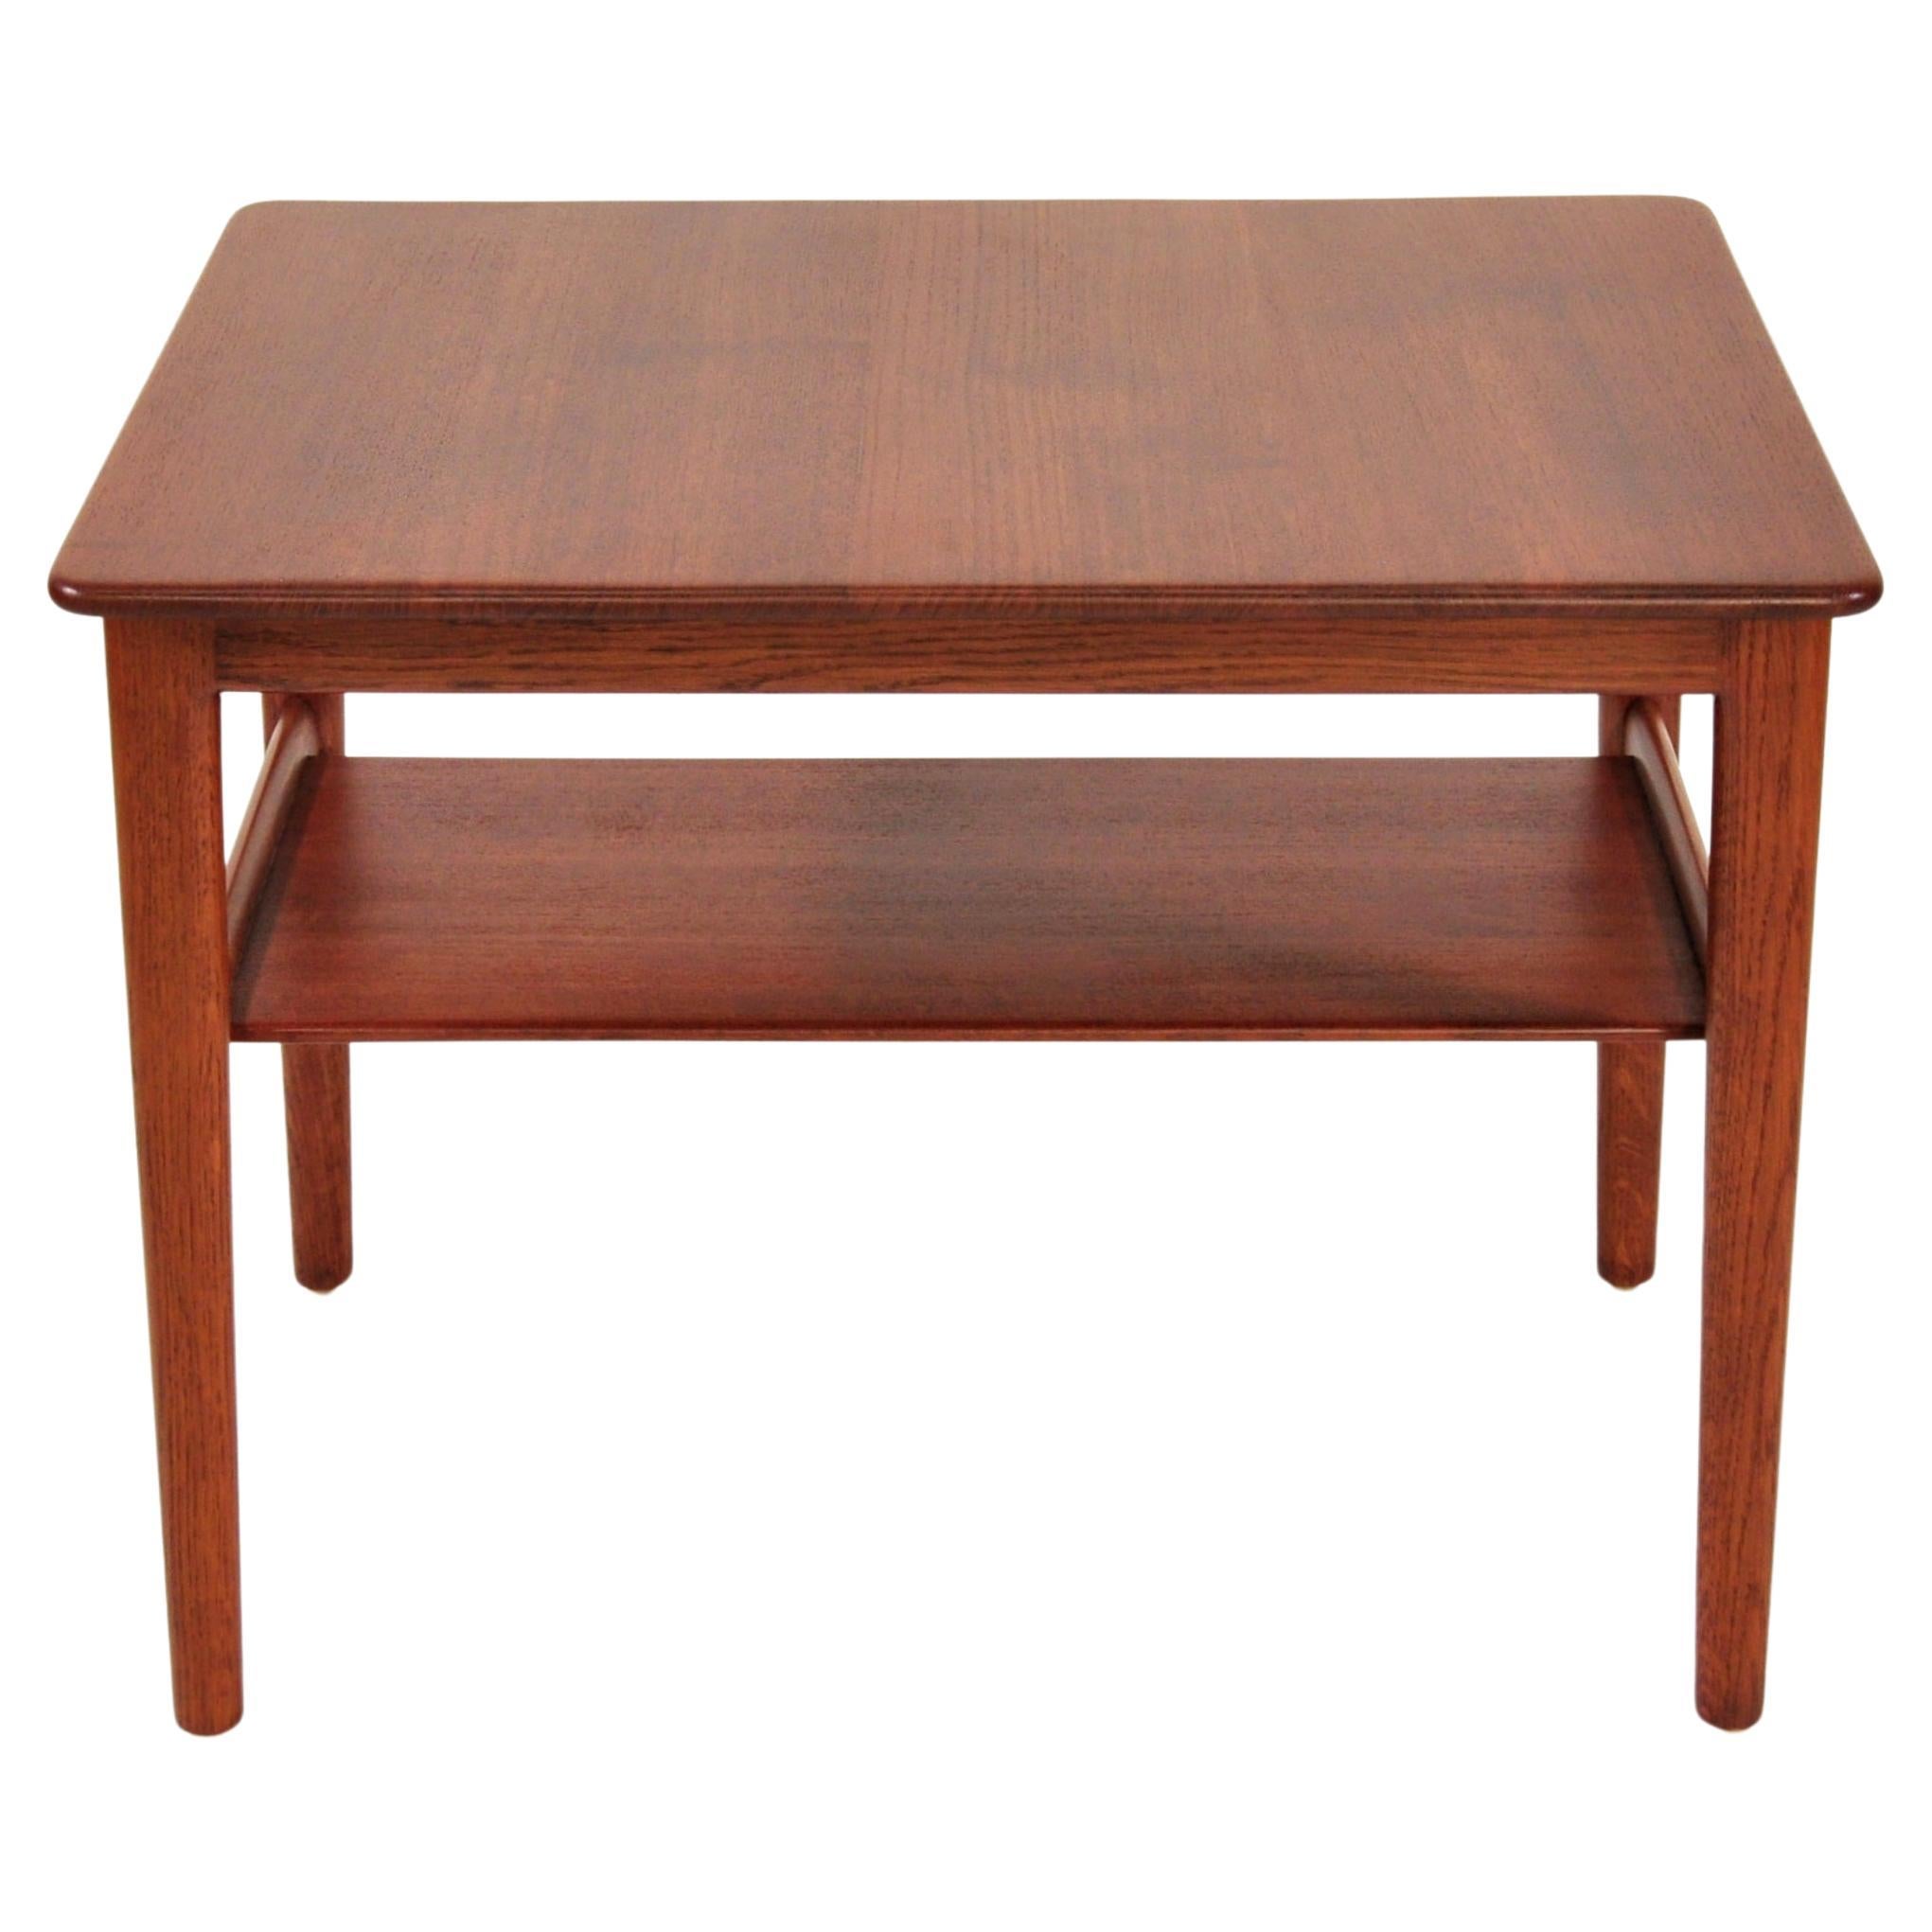 20th Century Hans Wegner Teak Table with Hidden Tray, Johannes Hansen, 1960s For Sale